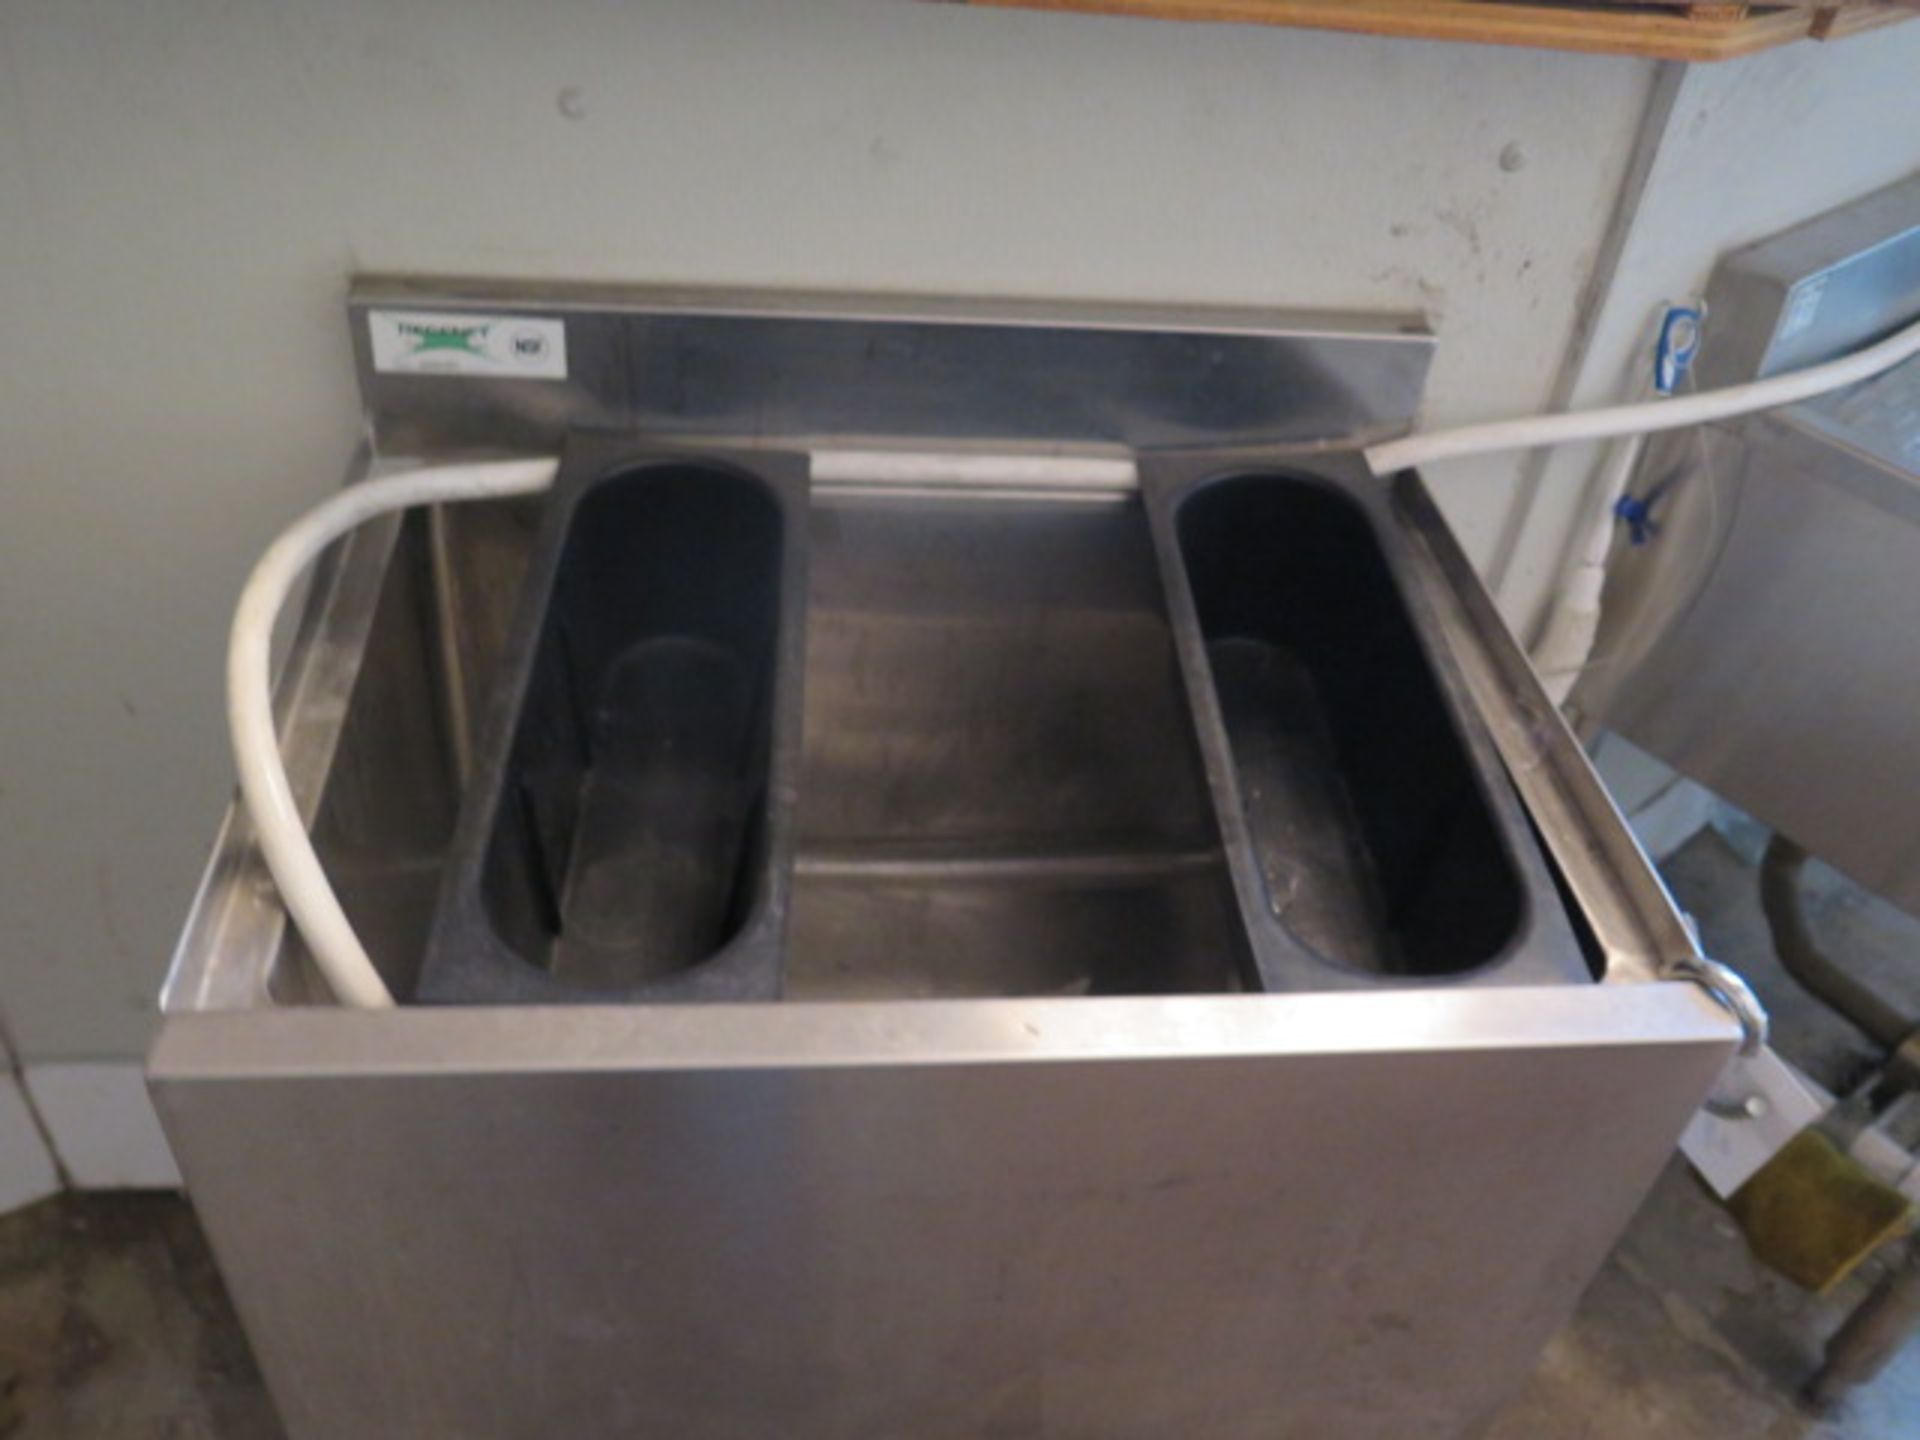 Regency mdl. 6001B1824 Stainless Steel Wash Sink (SOLD AS-IS - NO WARRANTY) - Image 2 of 4